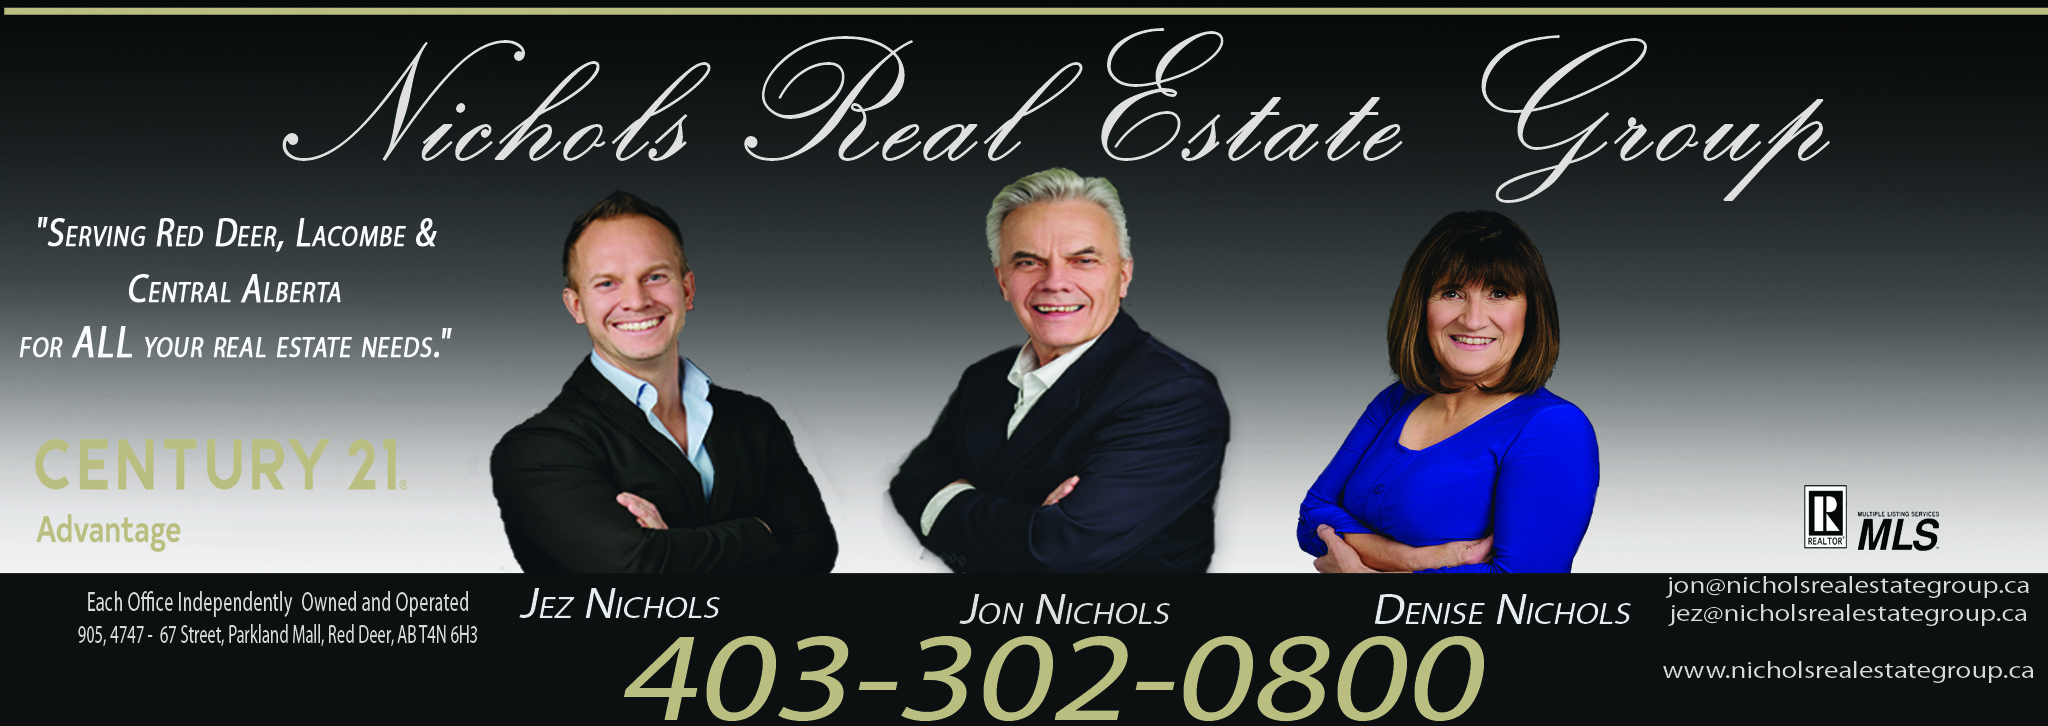 Nichols_Real_Estate_Group